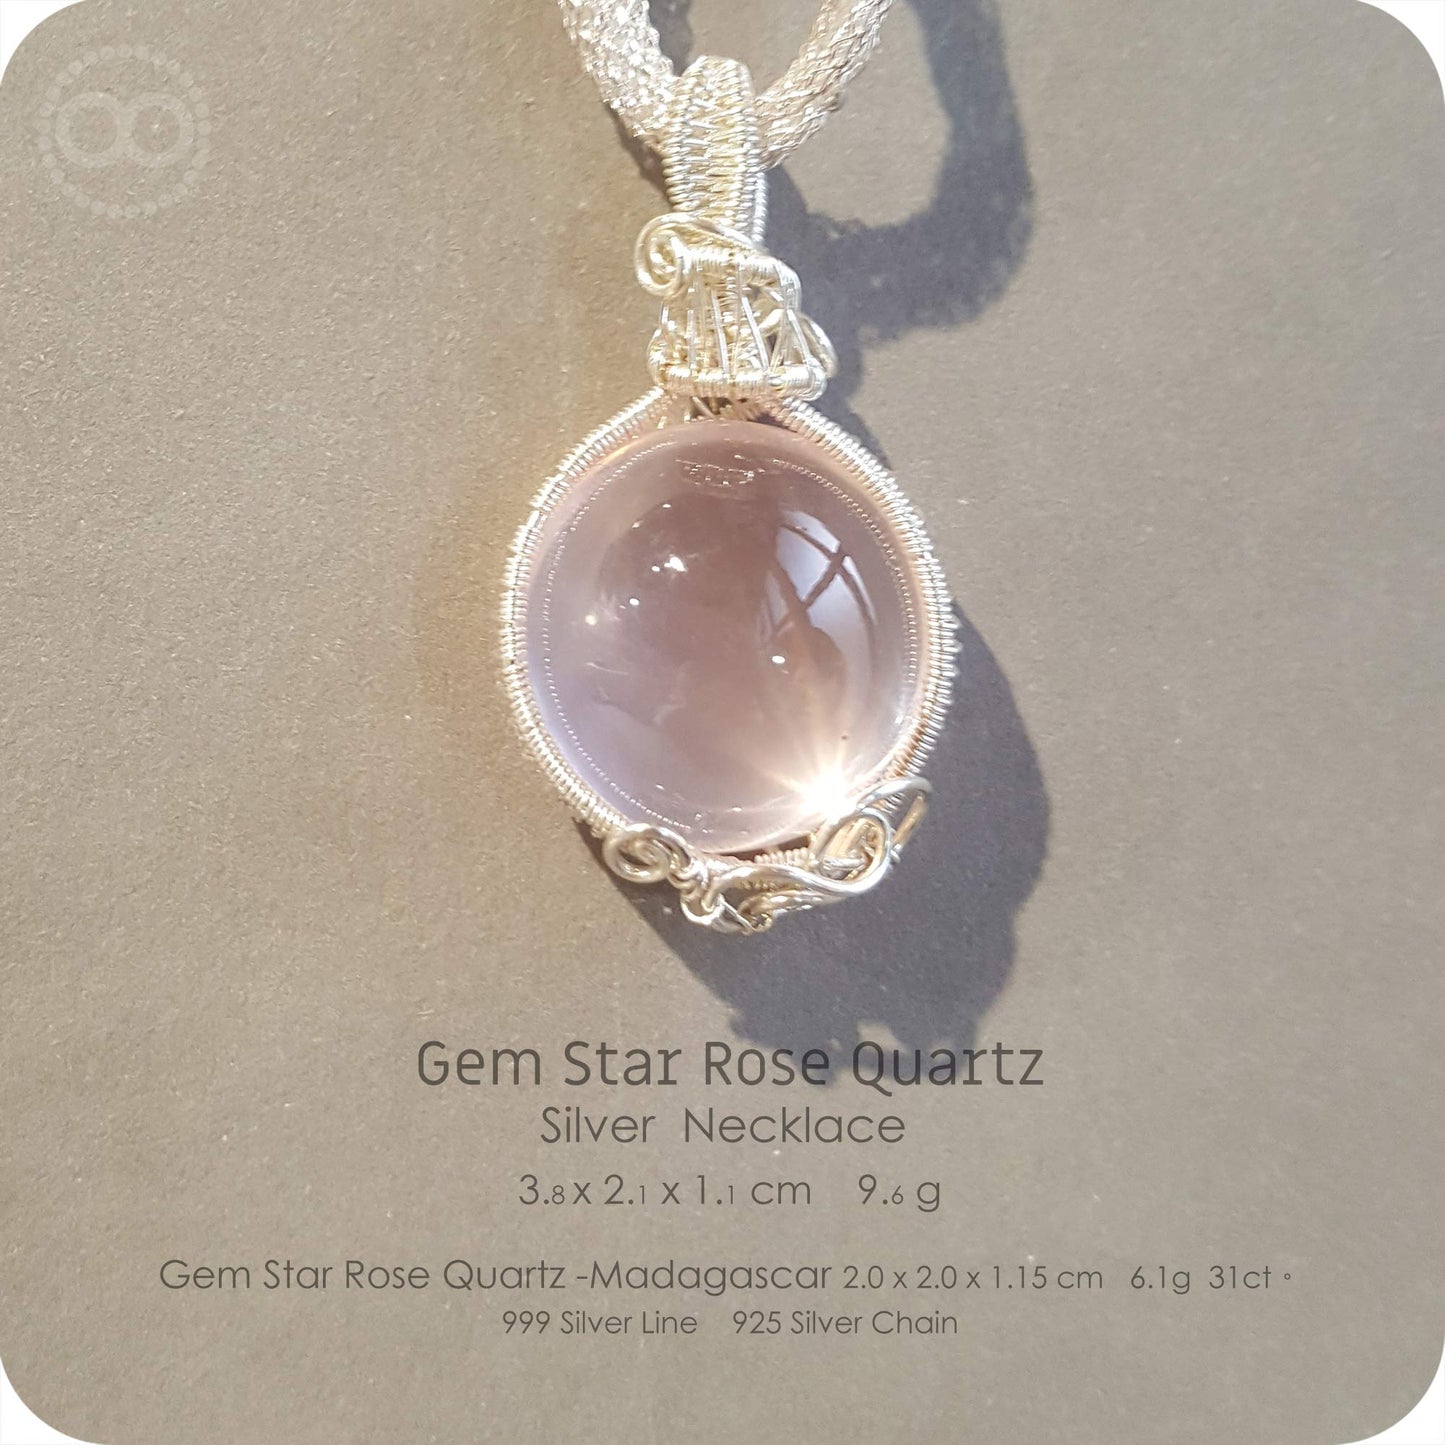 Gem Star Rose Quartz 果凍星光粉晶寶石 Silver Necklace - H212